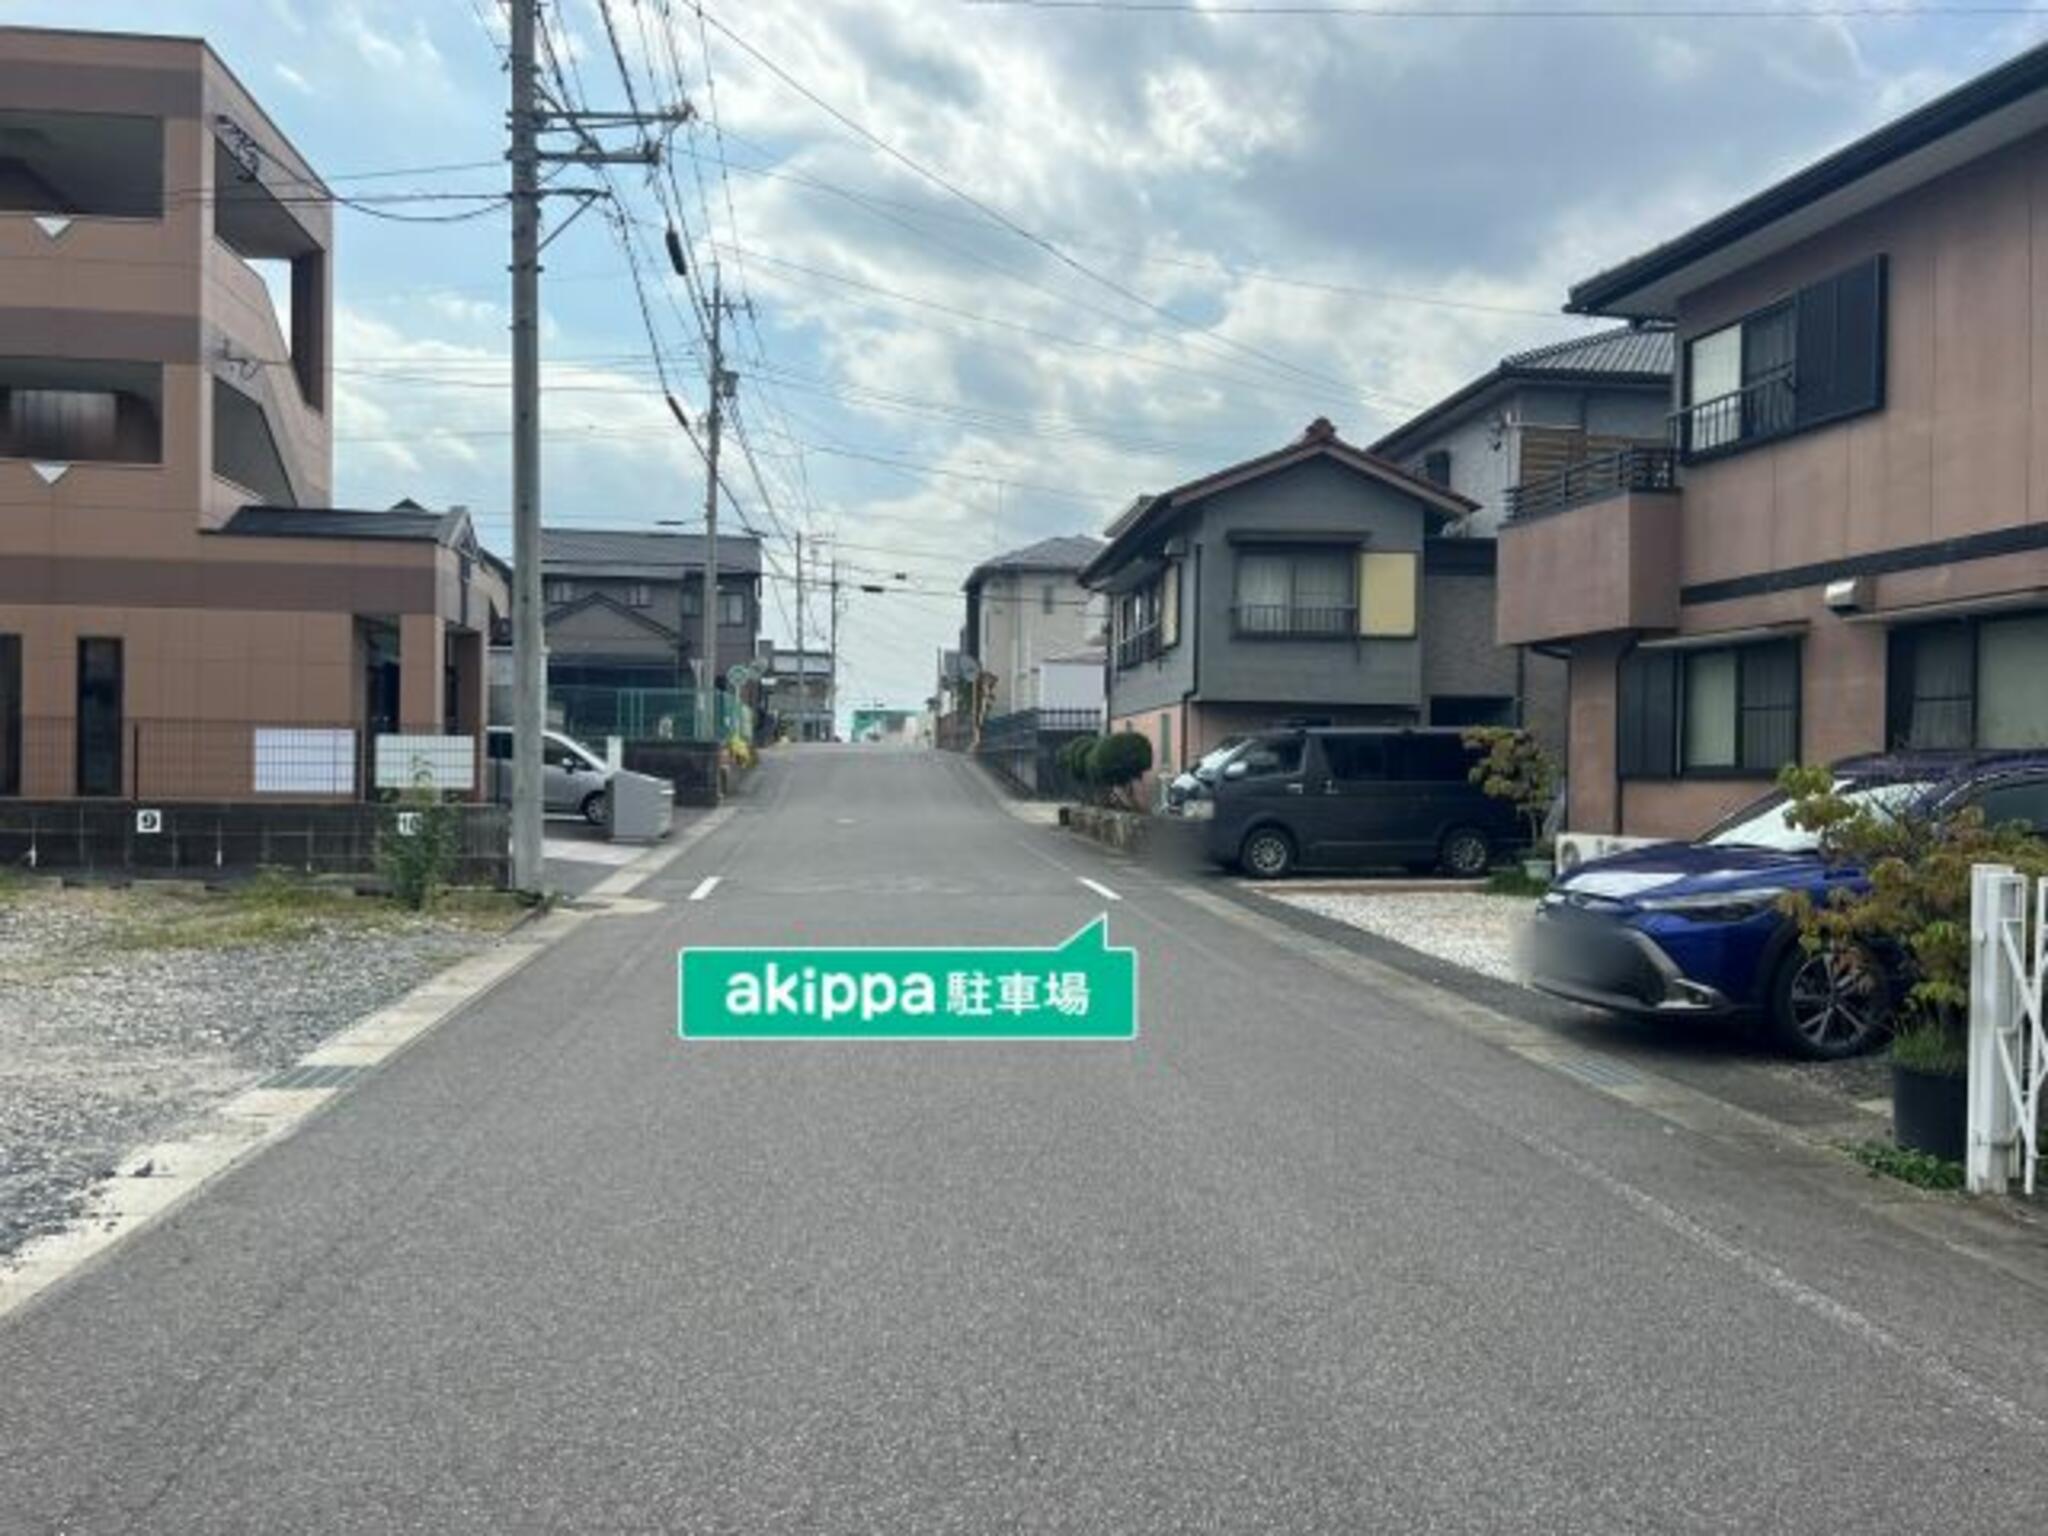 akippa駐車場:愛知県豊田市小川町3丁目6-2の代表写真3